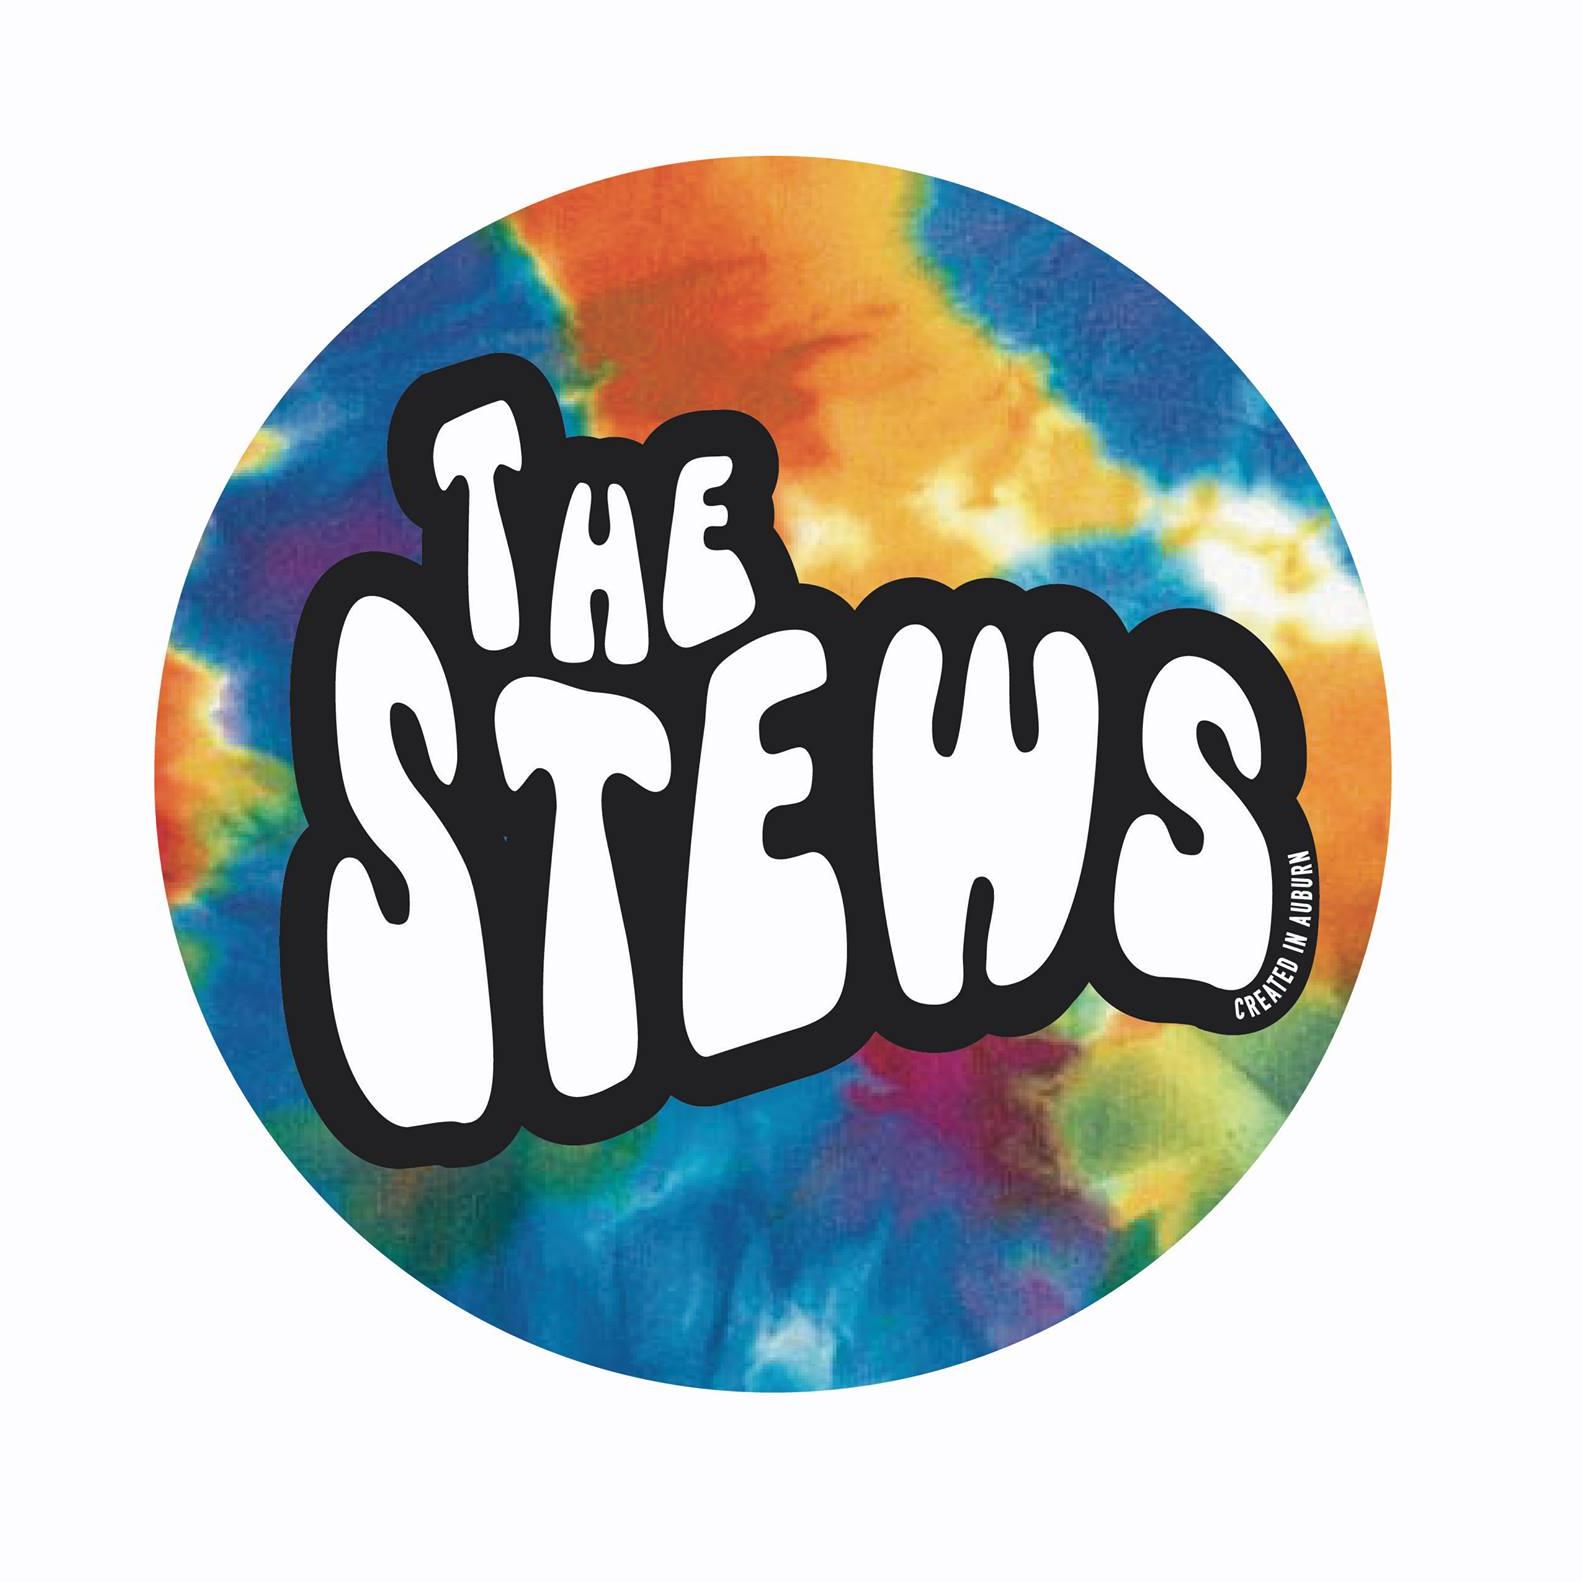 The Stews